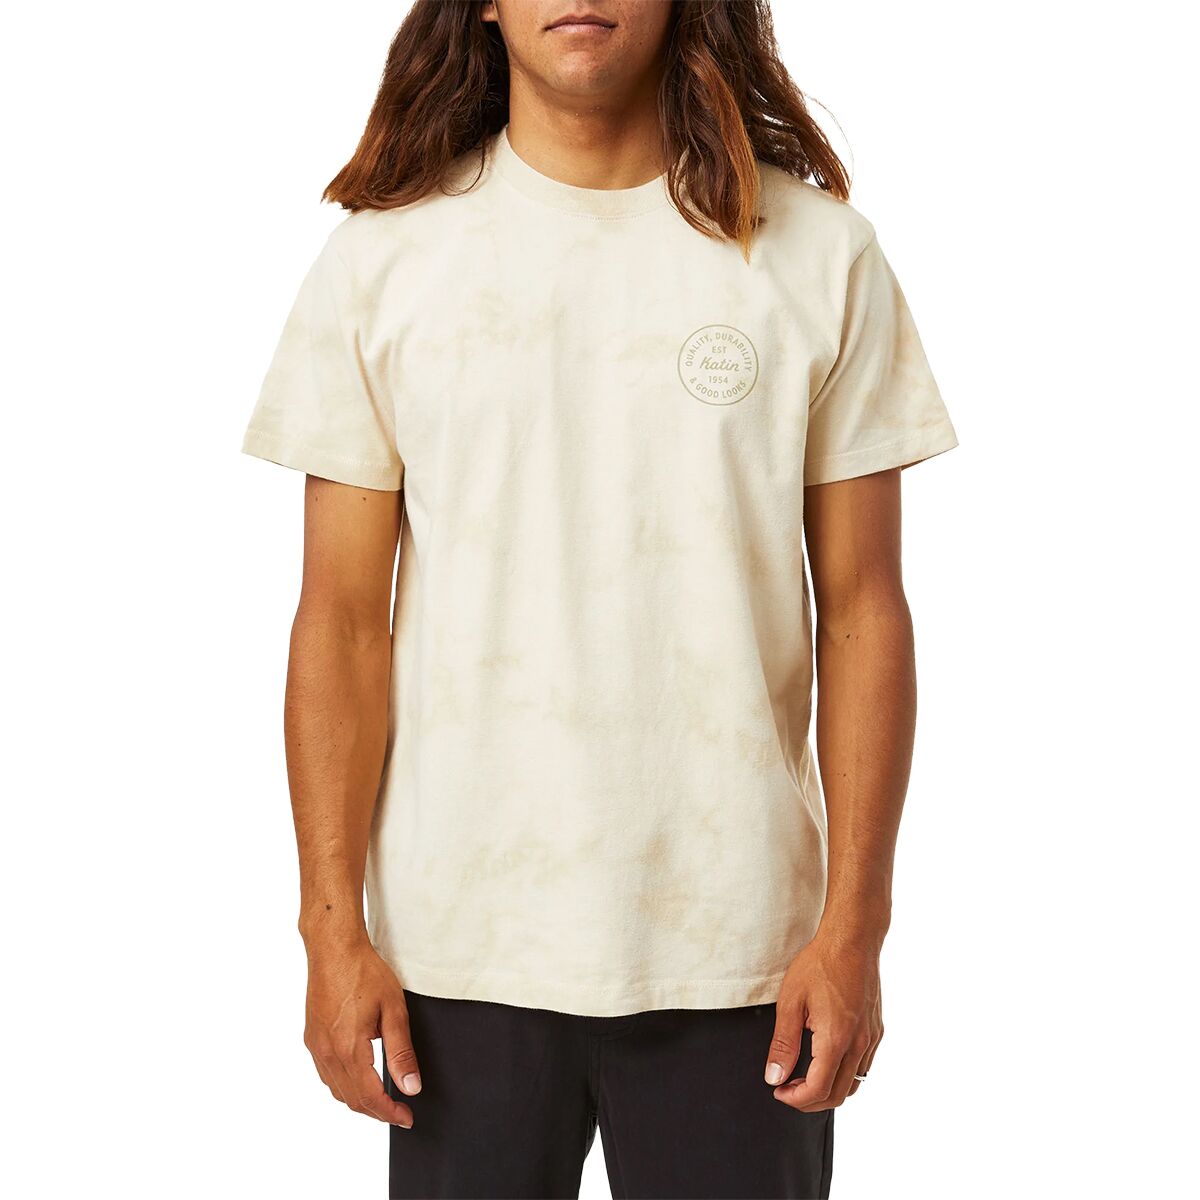 Katin League Short-Sleeve T-Shirt - Men's